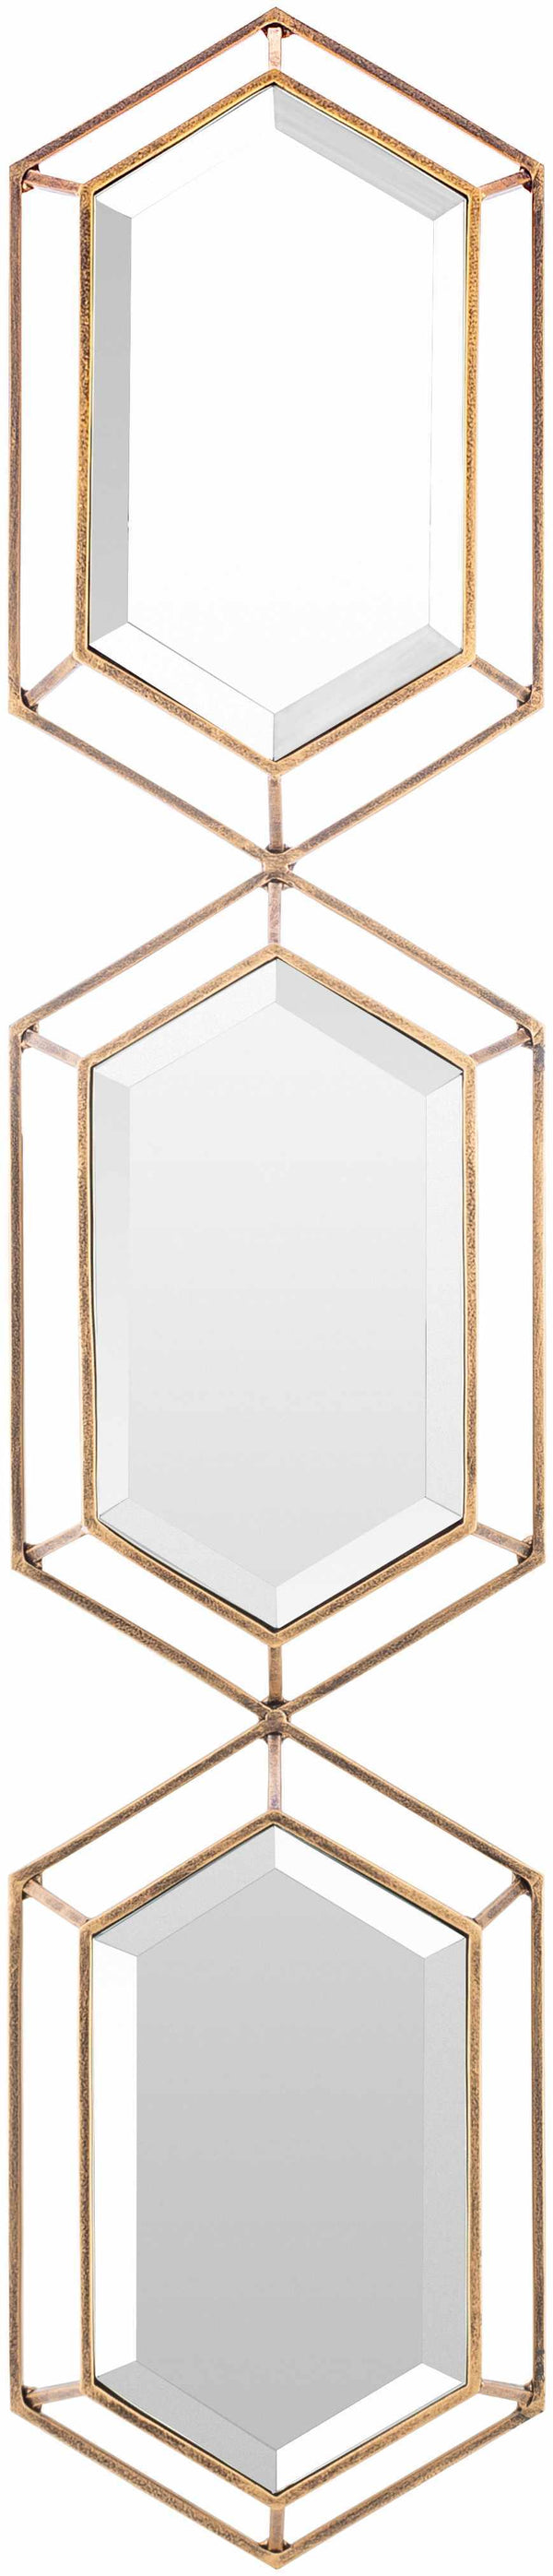 Obong Mirror